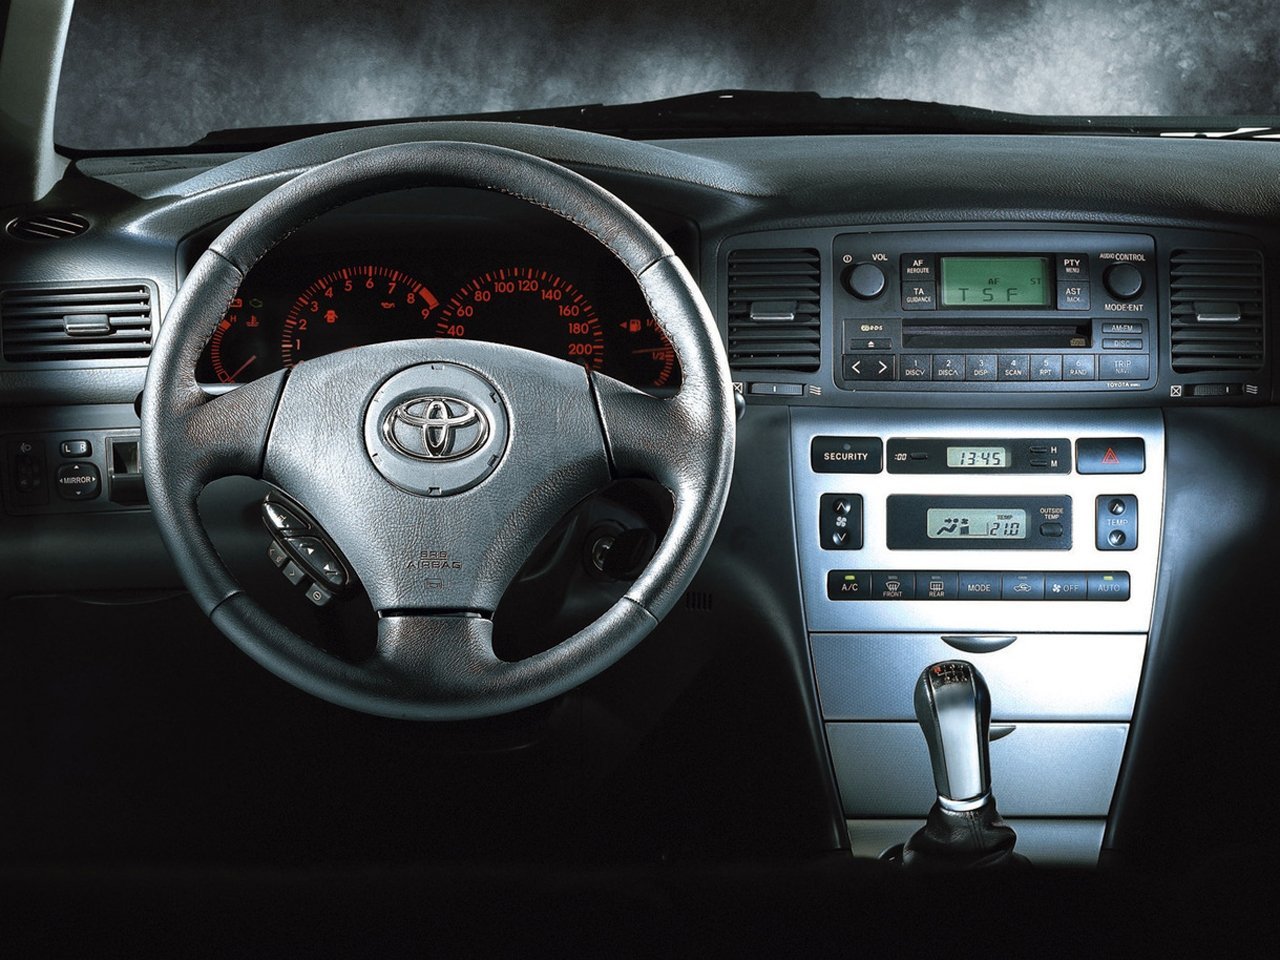 универсал Toyota Corolla 2001 - 2004г выпуска модификация 1.4 MT (97 л.с.)